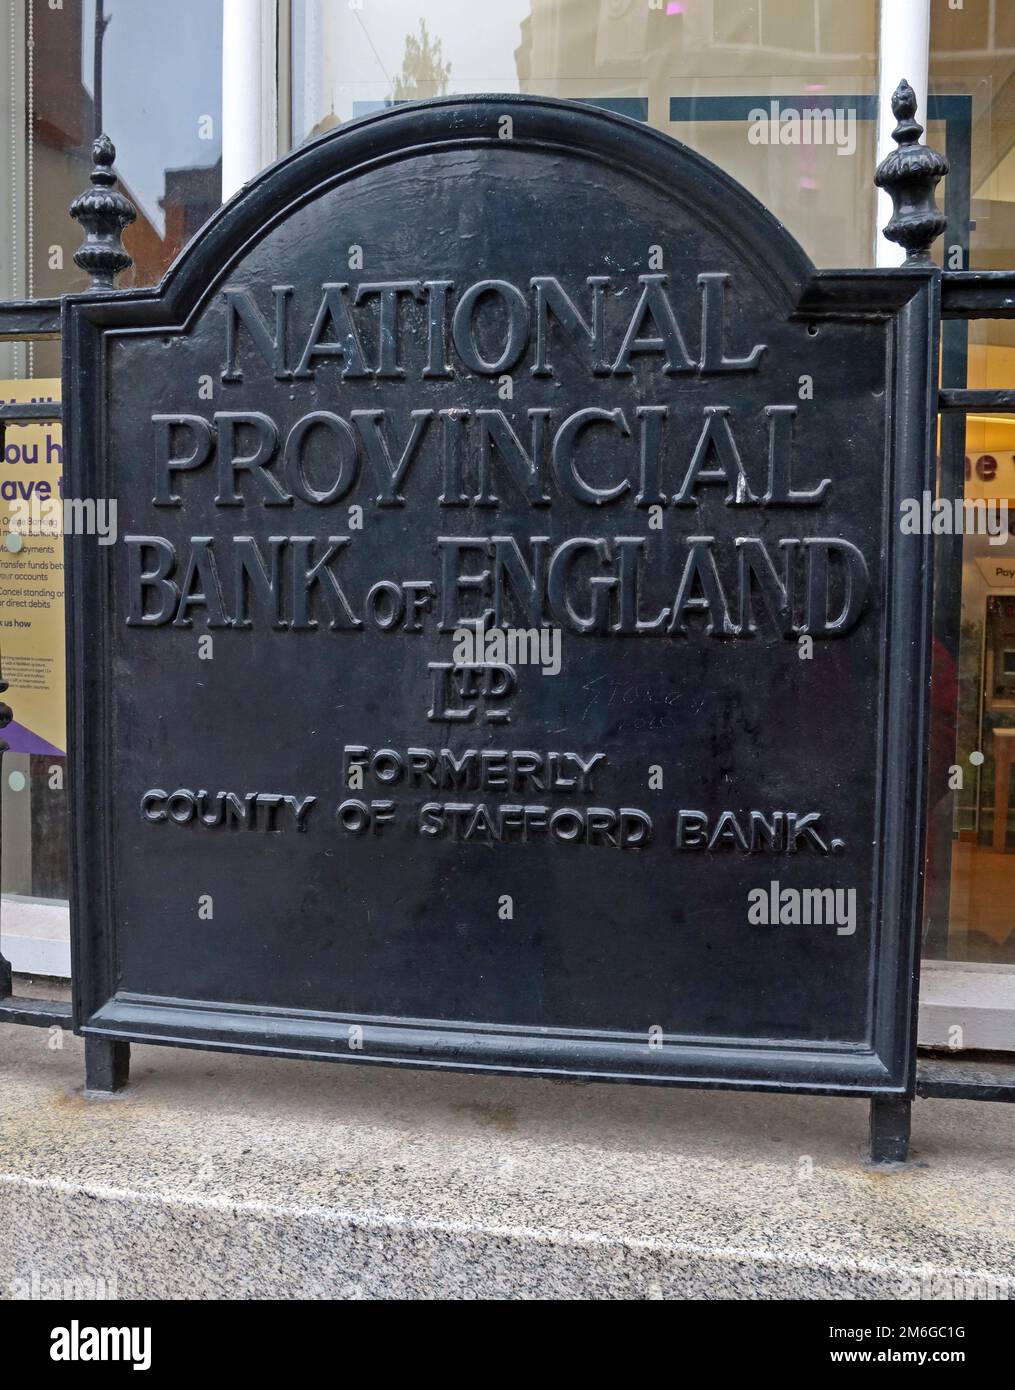 Schild mit der National Provincial Bank England, vormals County of Stafford Bank (NatWest), Queen Square, Wolverhampton, England, WV1 1TL Stockfoto